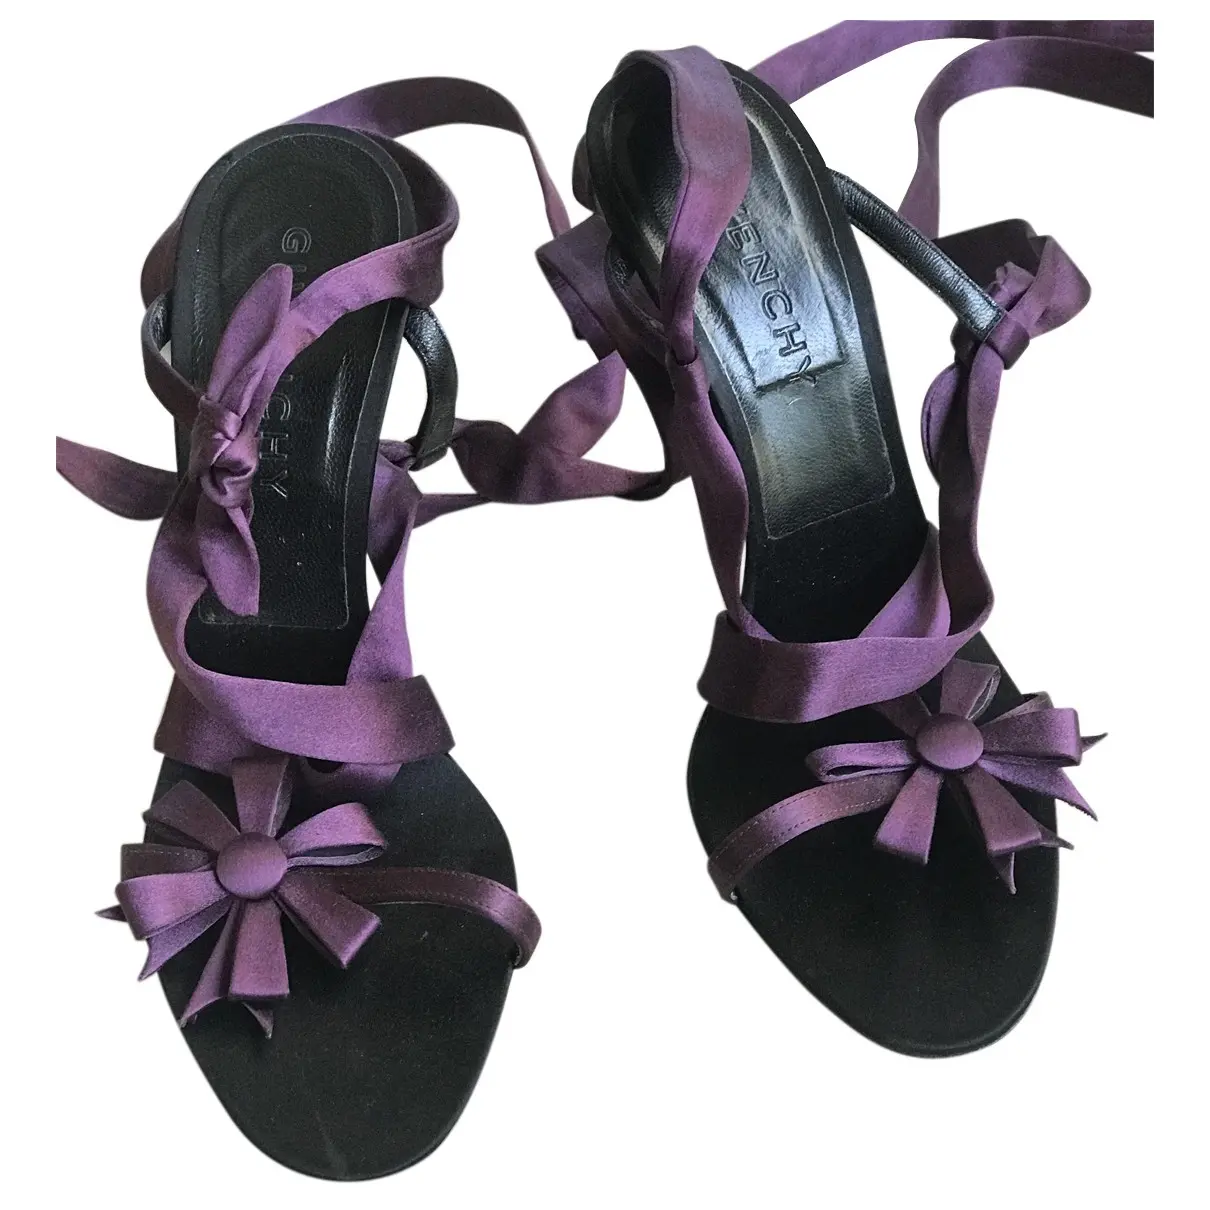 Cloth heels Givenchy - Vintage